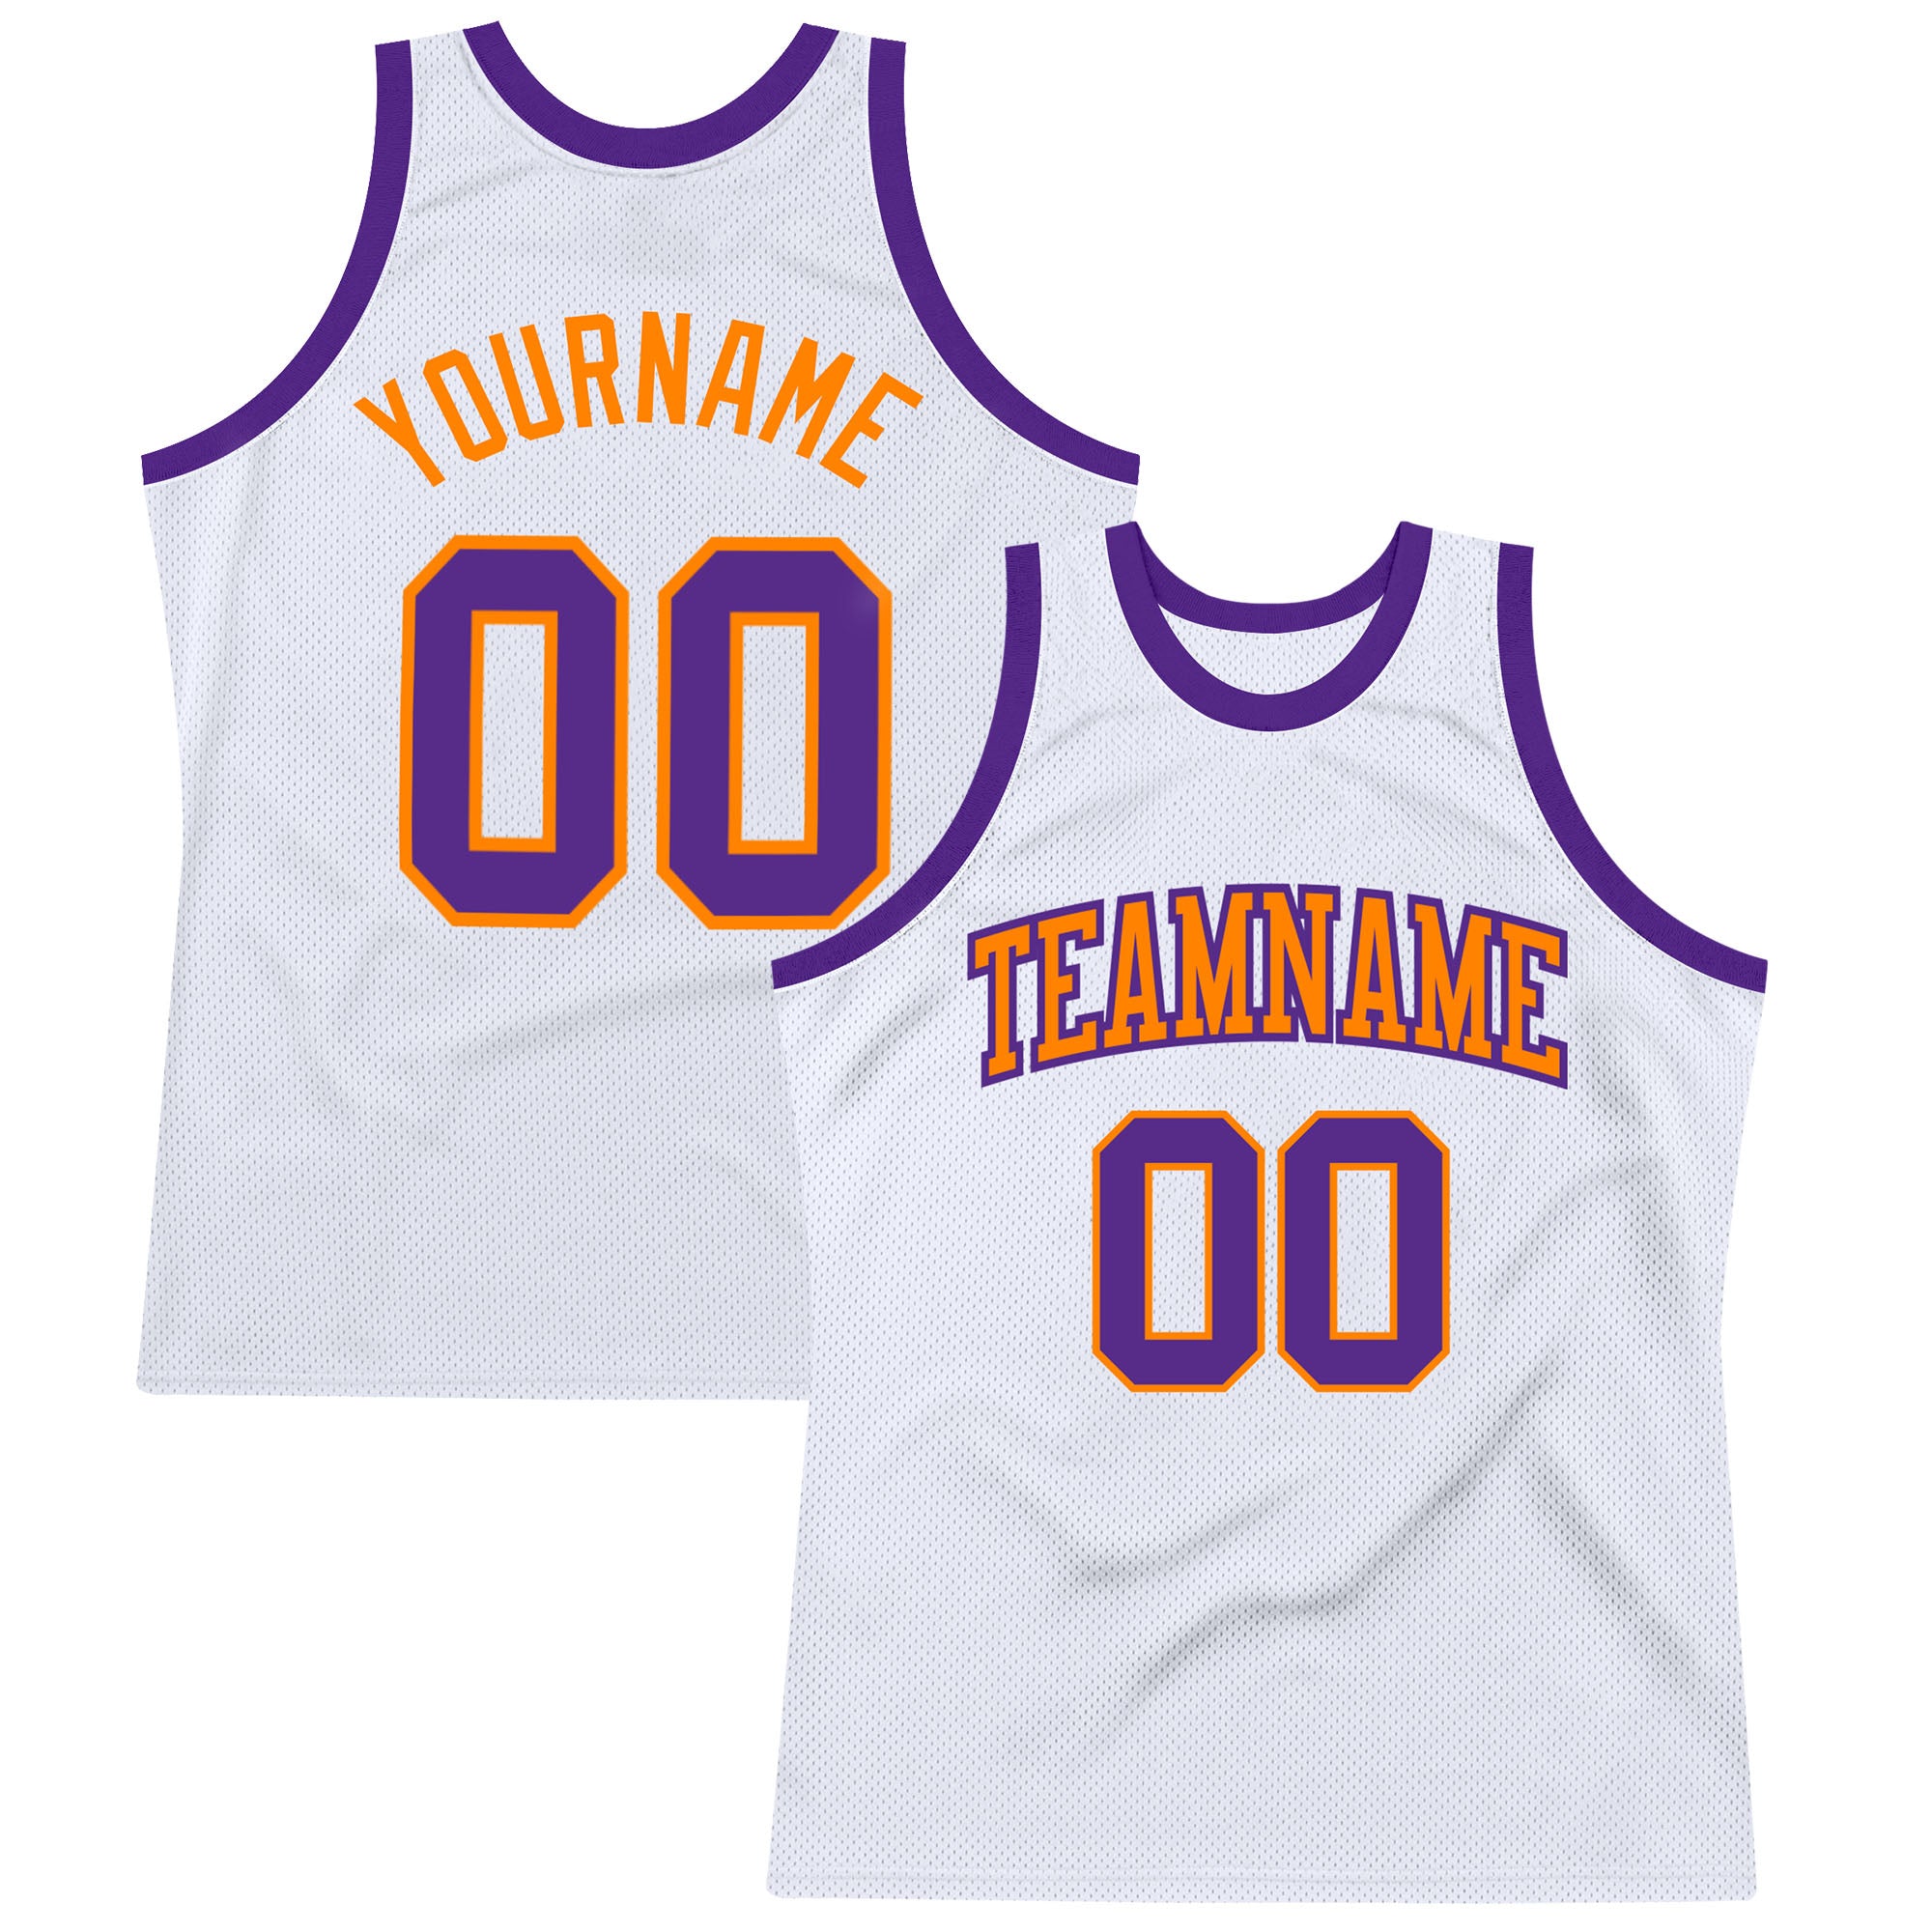 Lakers Jersey Custom 